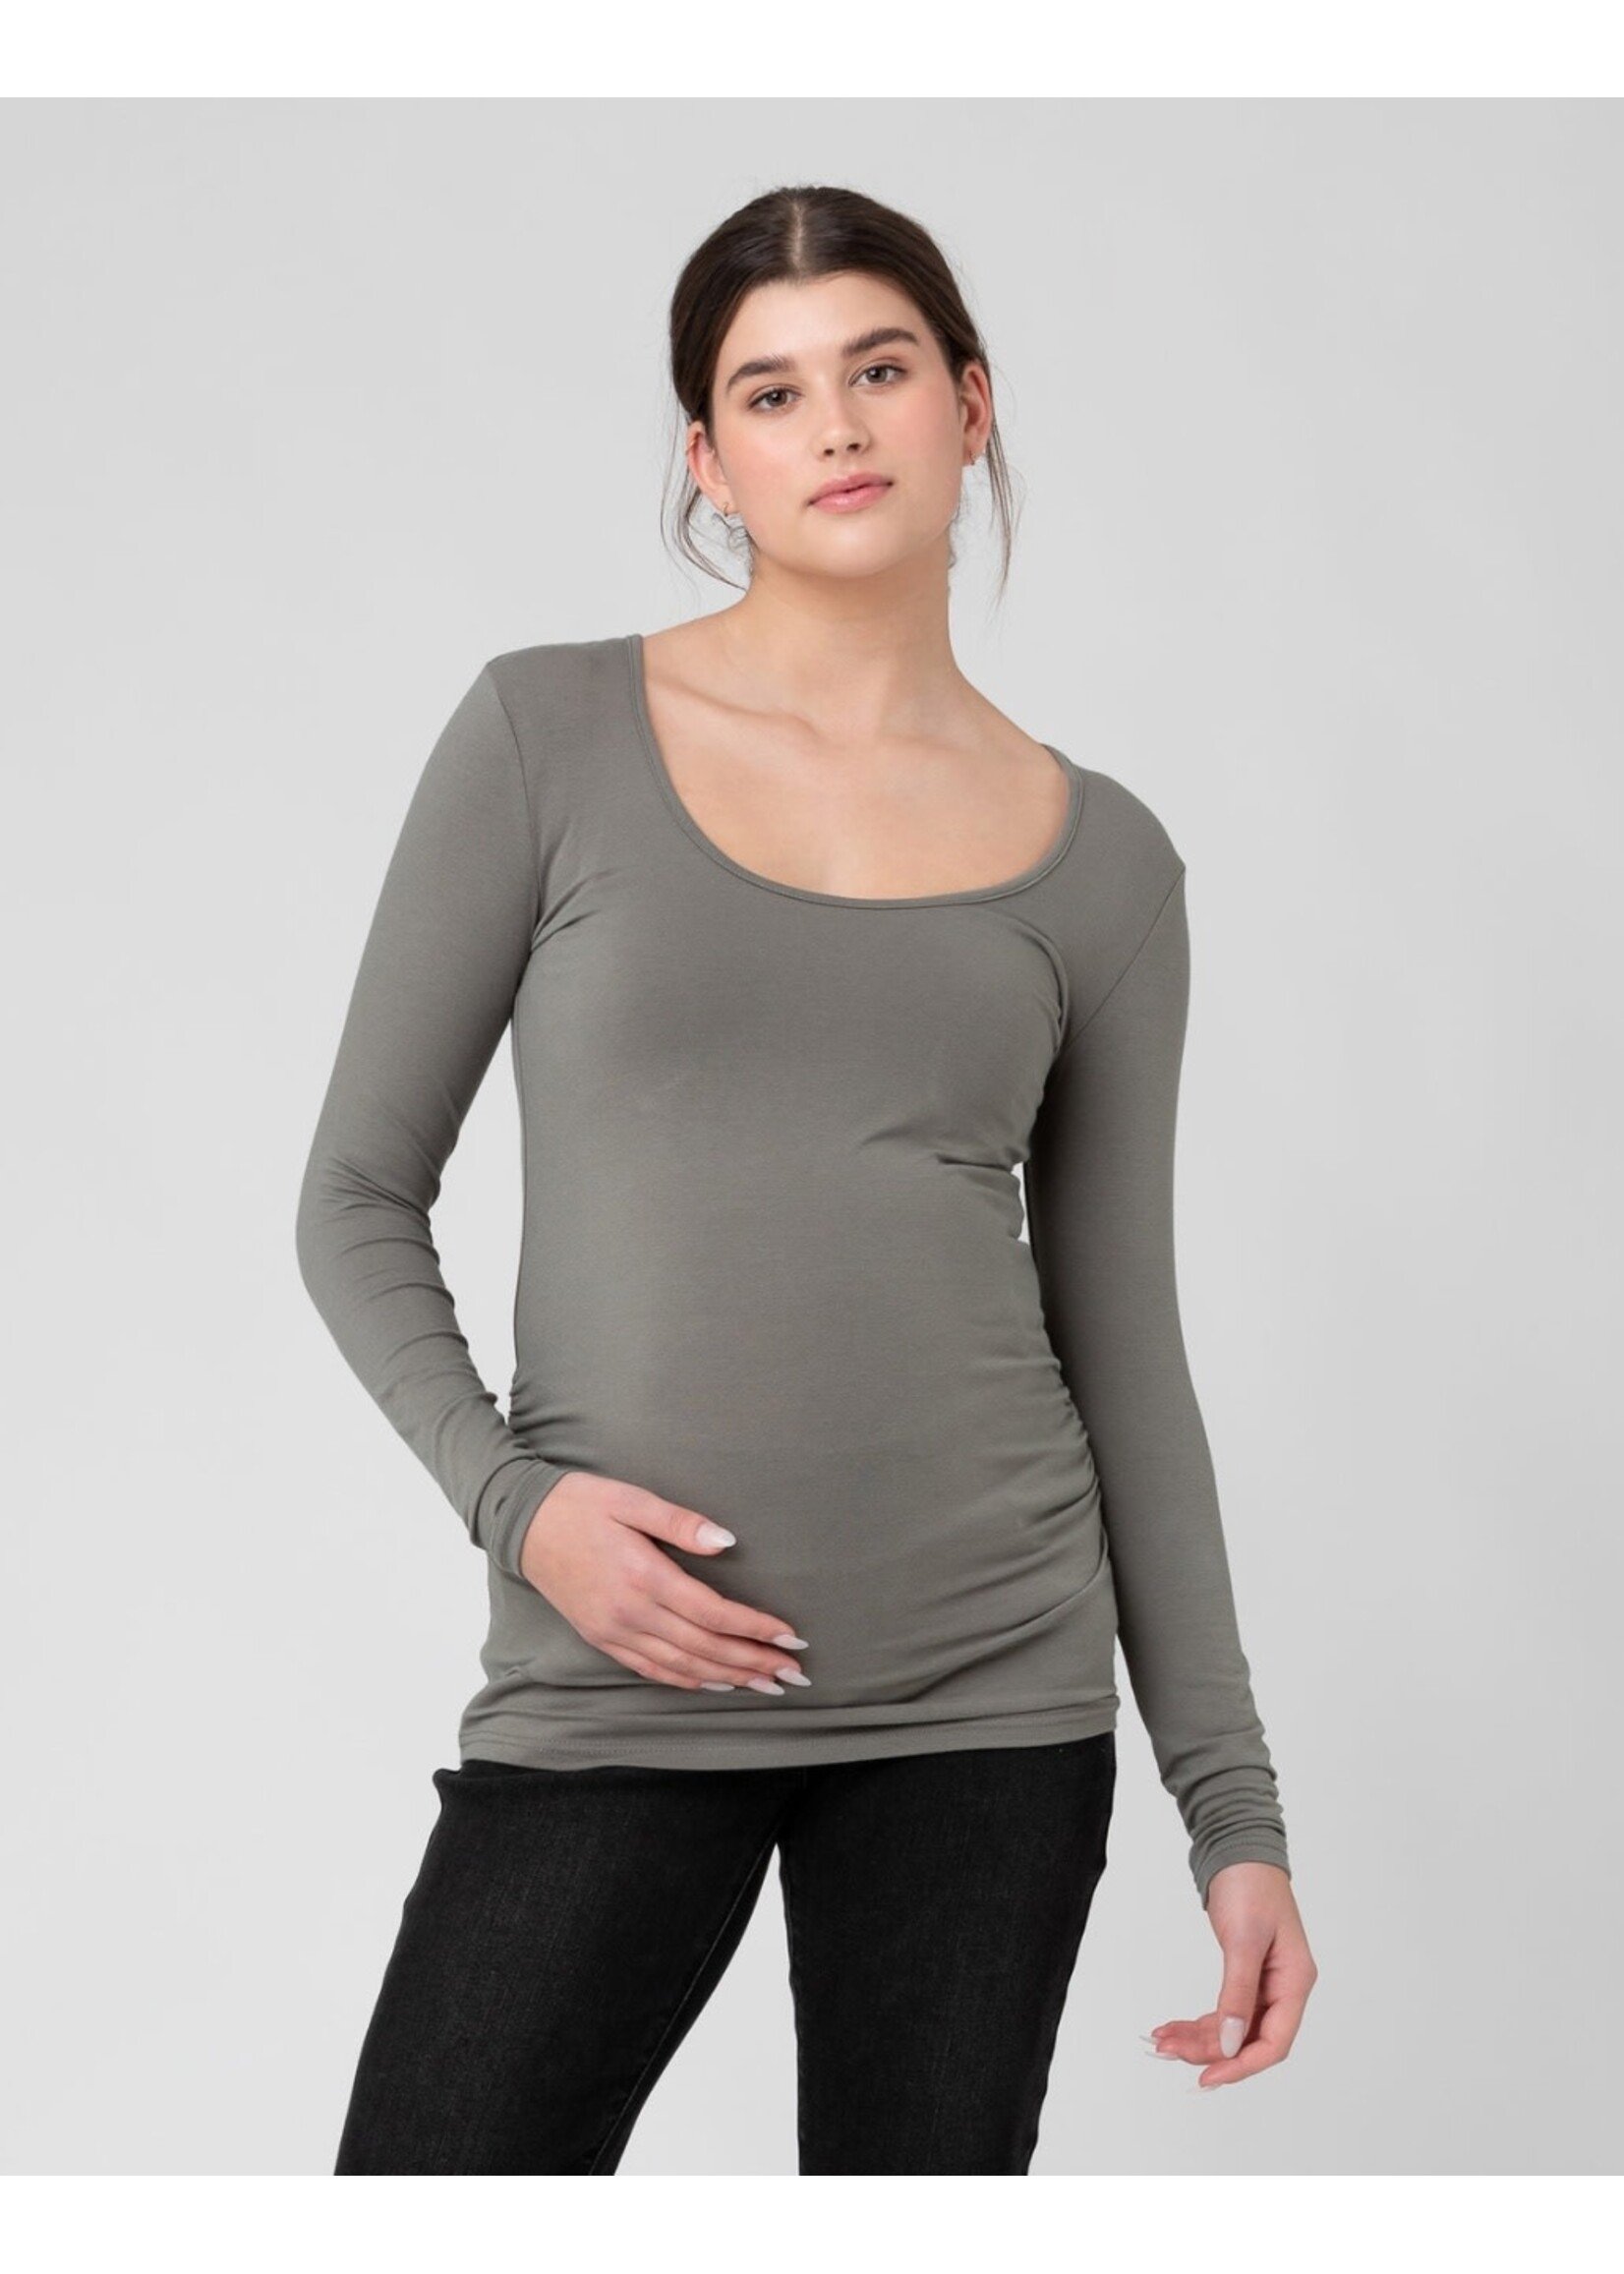 https://cdn.shoplightspeed.com/shops/641417/files/57542846/1652x2313x2/ripe-maternity-ripe-maternity-organic-long-sleeve.jpg